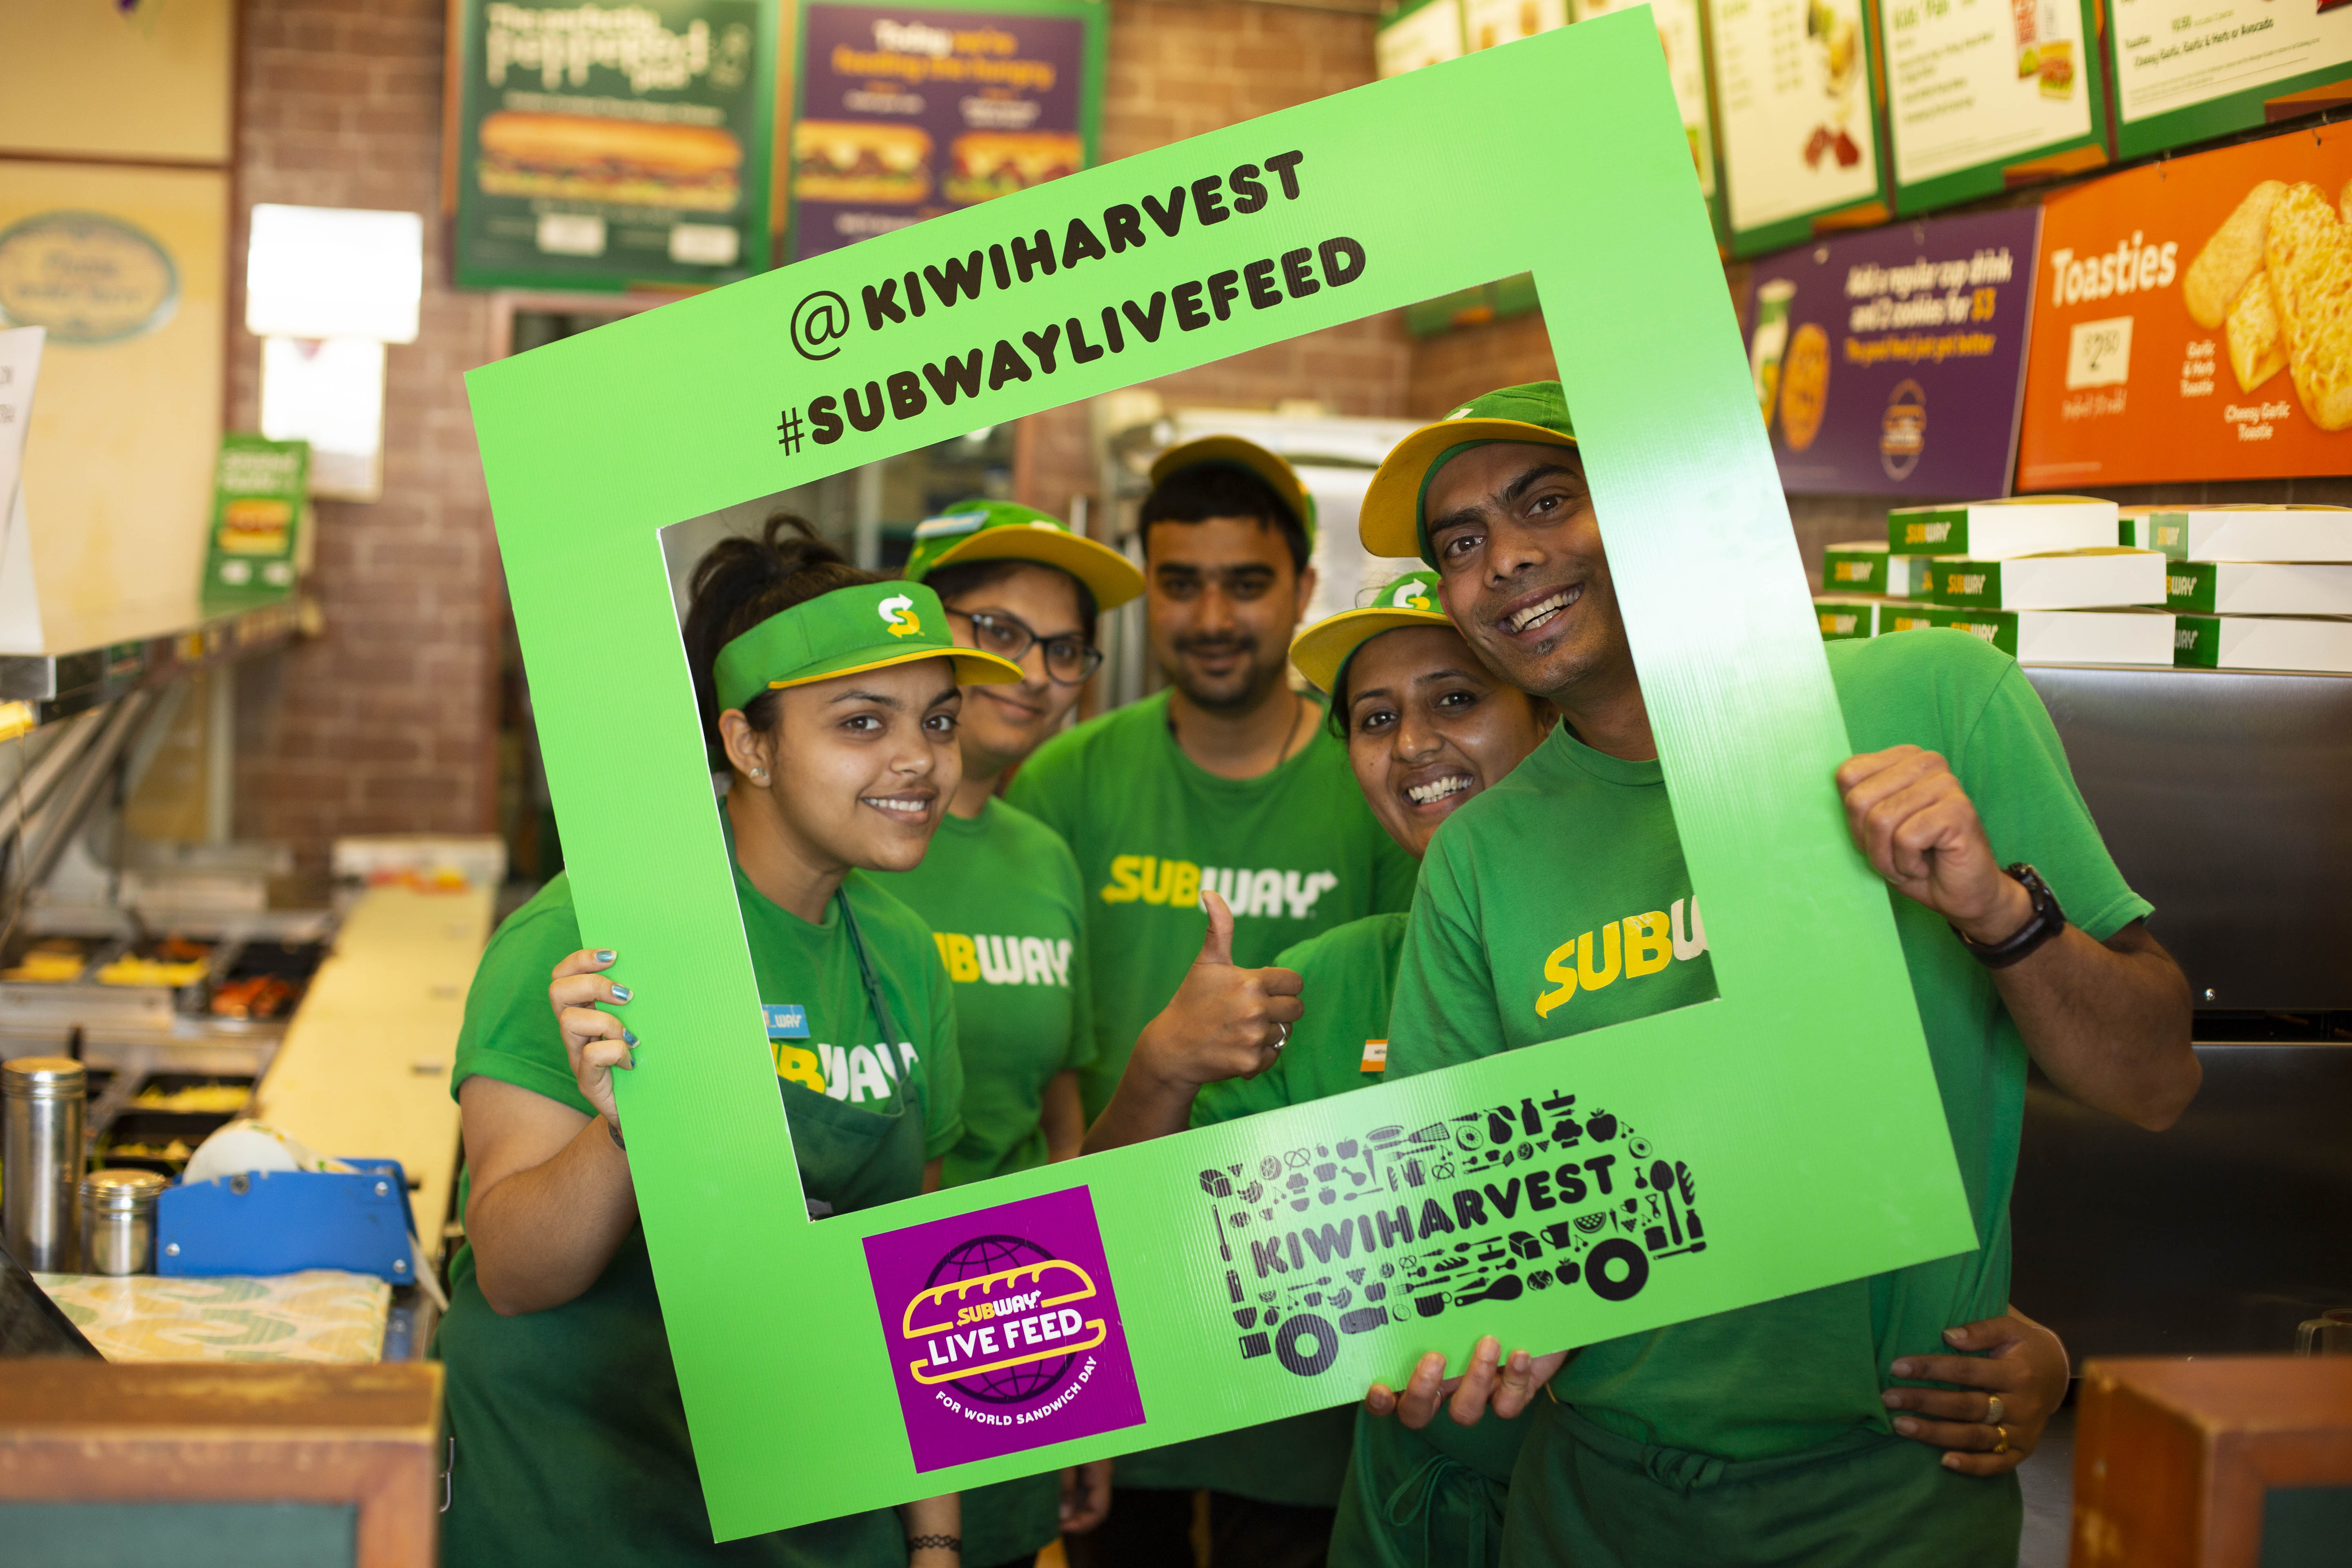 Subway_Kiwi Harvest_World Sandwich Day (2)